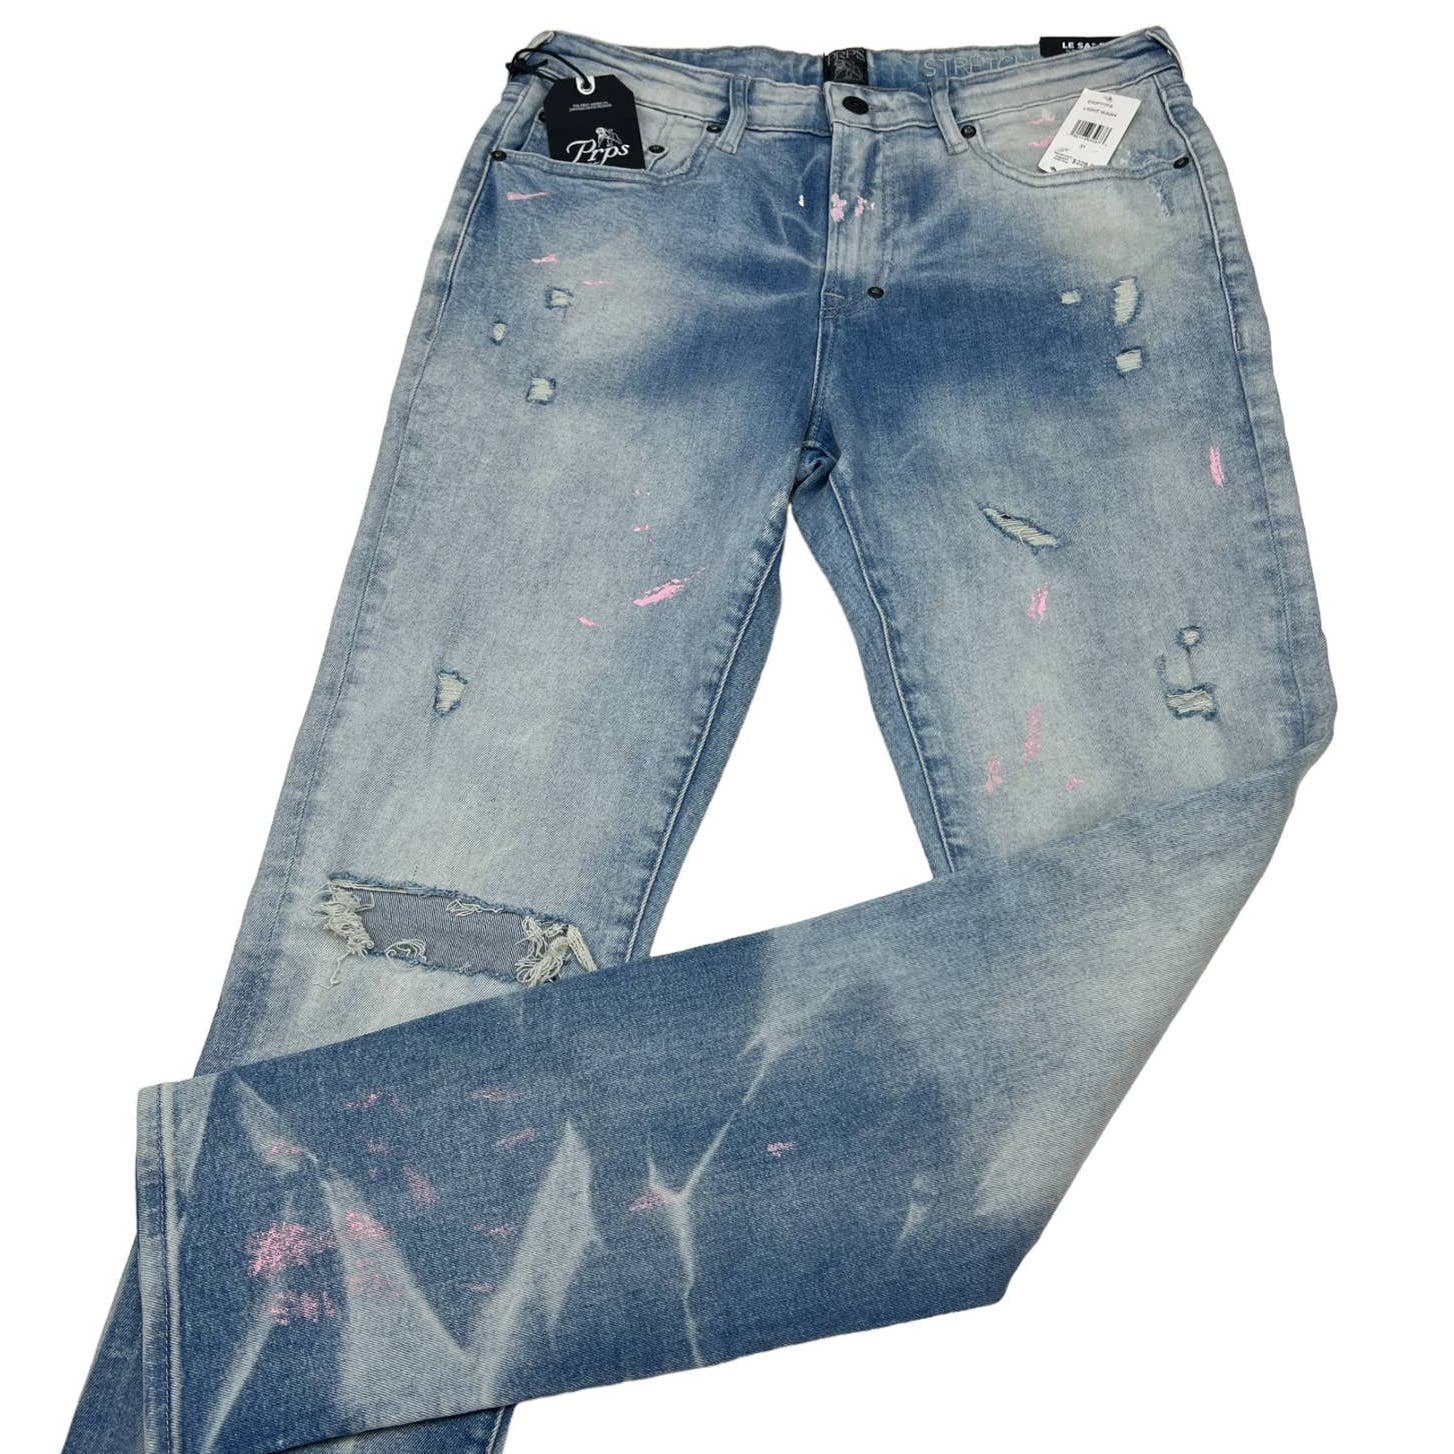 PRPS Le Sabre Men Light Wash Jeans US 31 Ripped Bleached Slim Fit